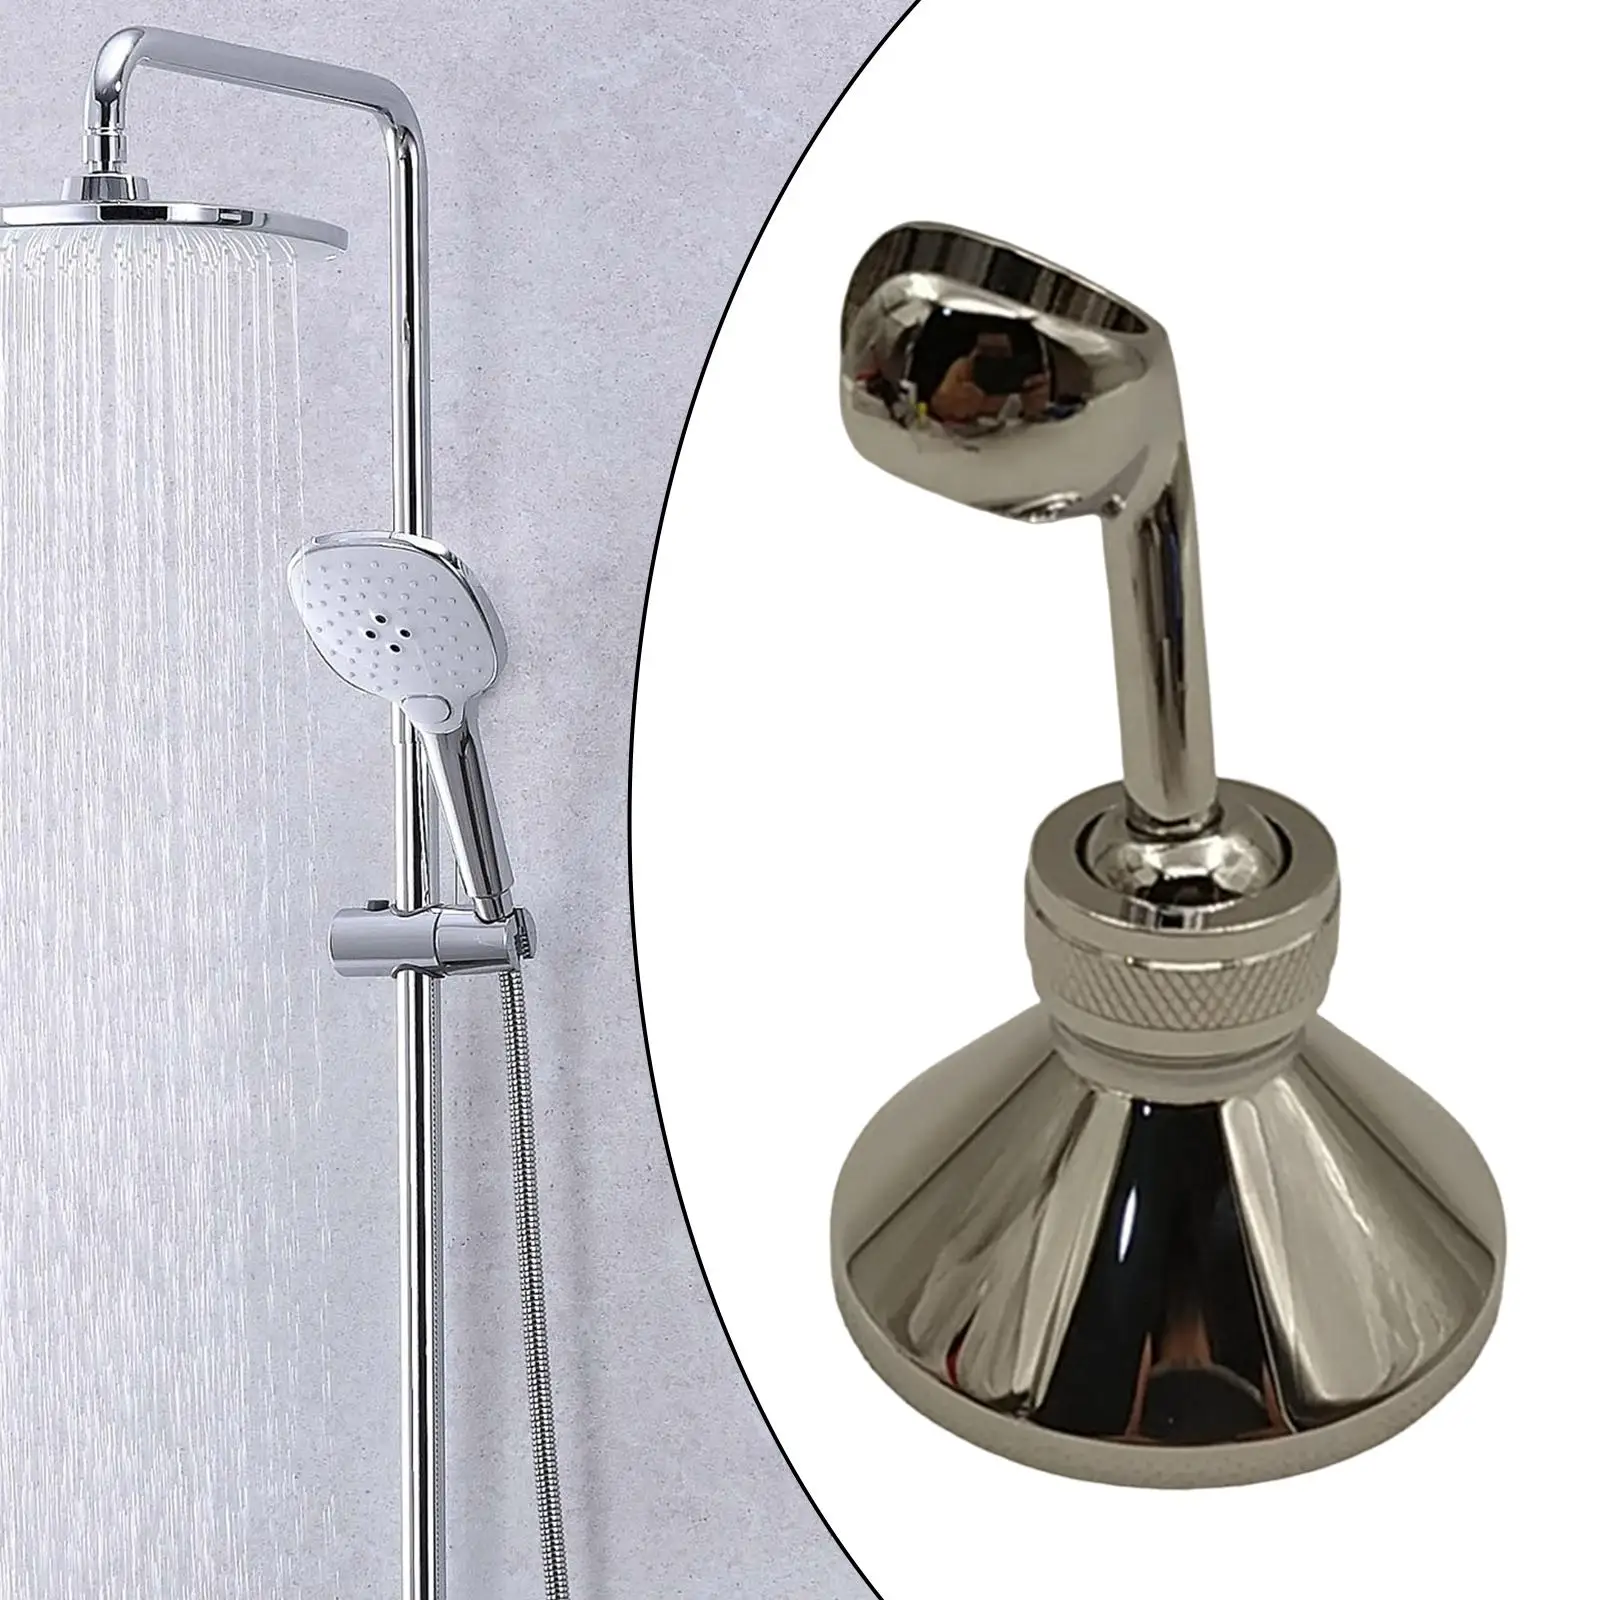 Shower Mounting Brackets Rust Proof Adjustable Bathroom Shower Spray Holder